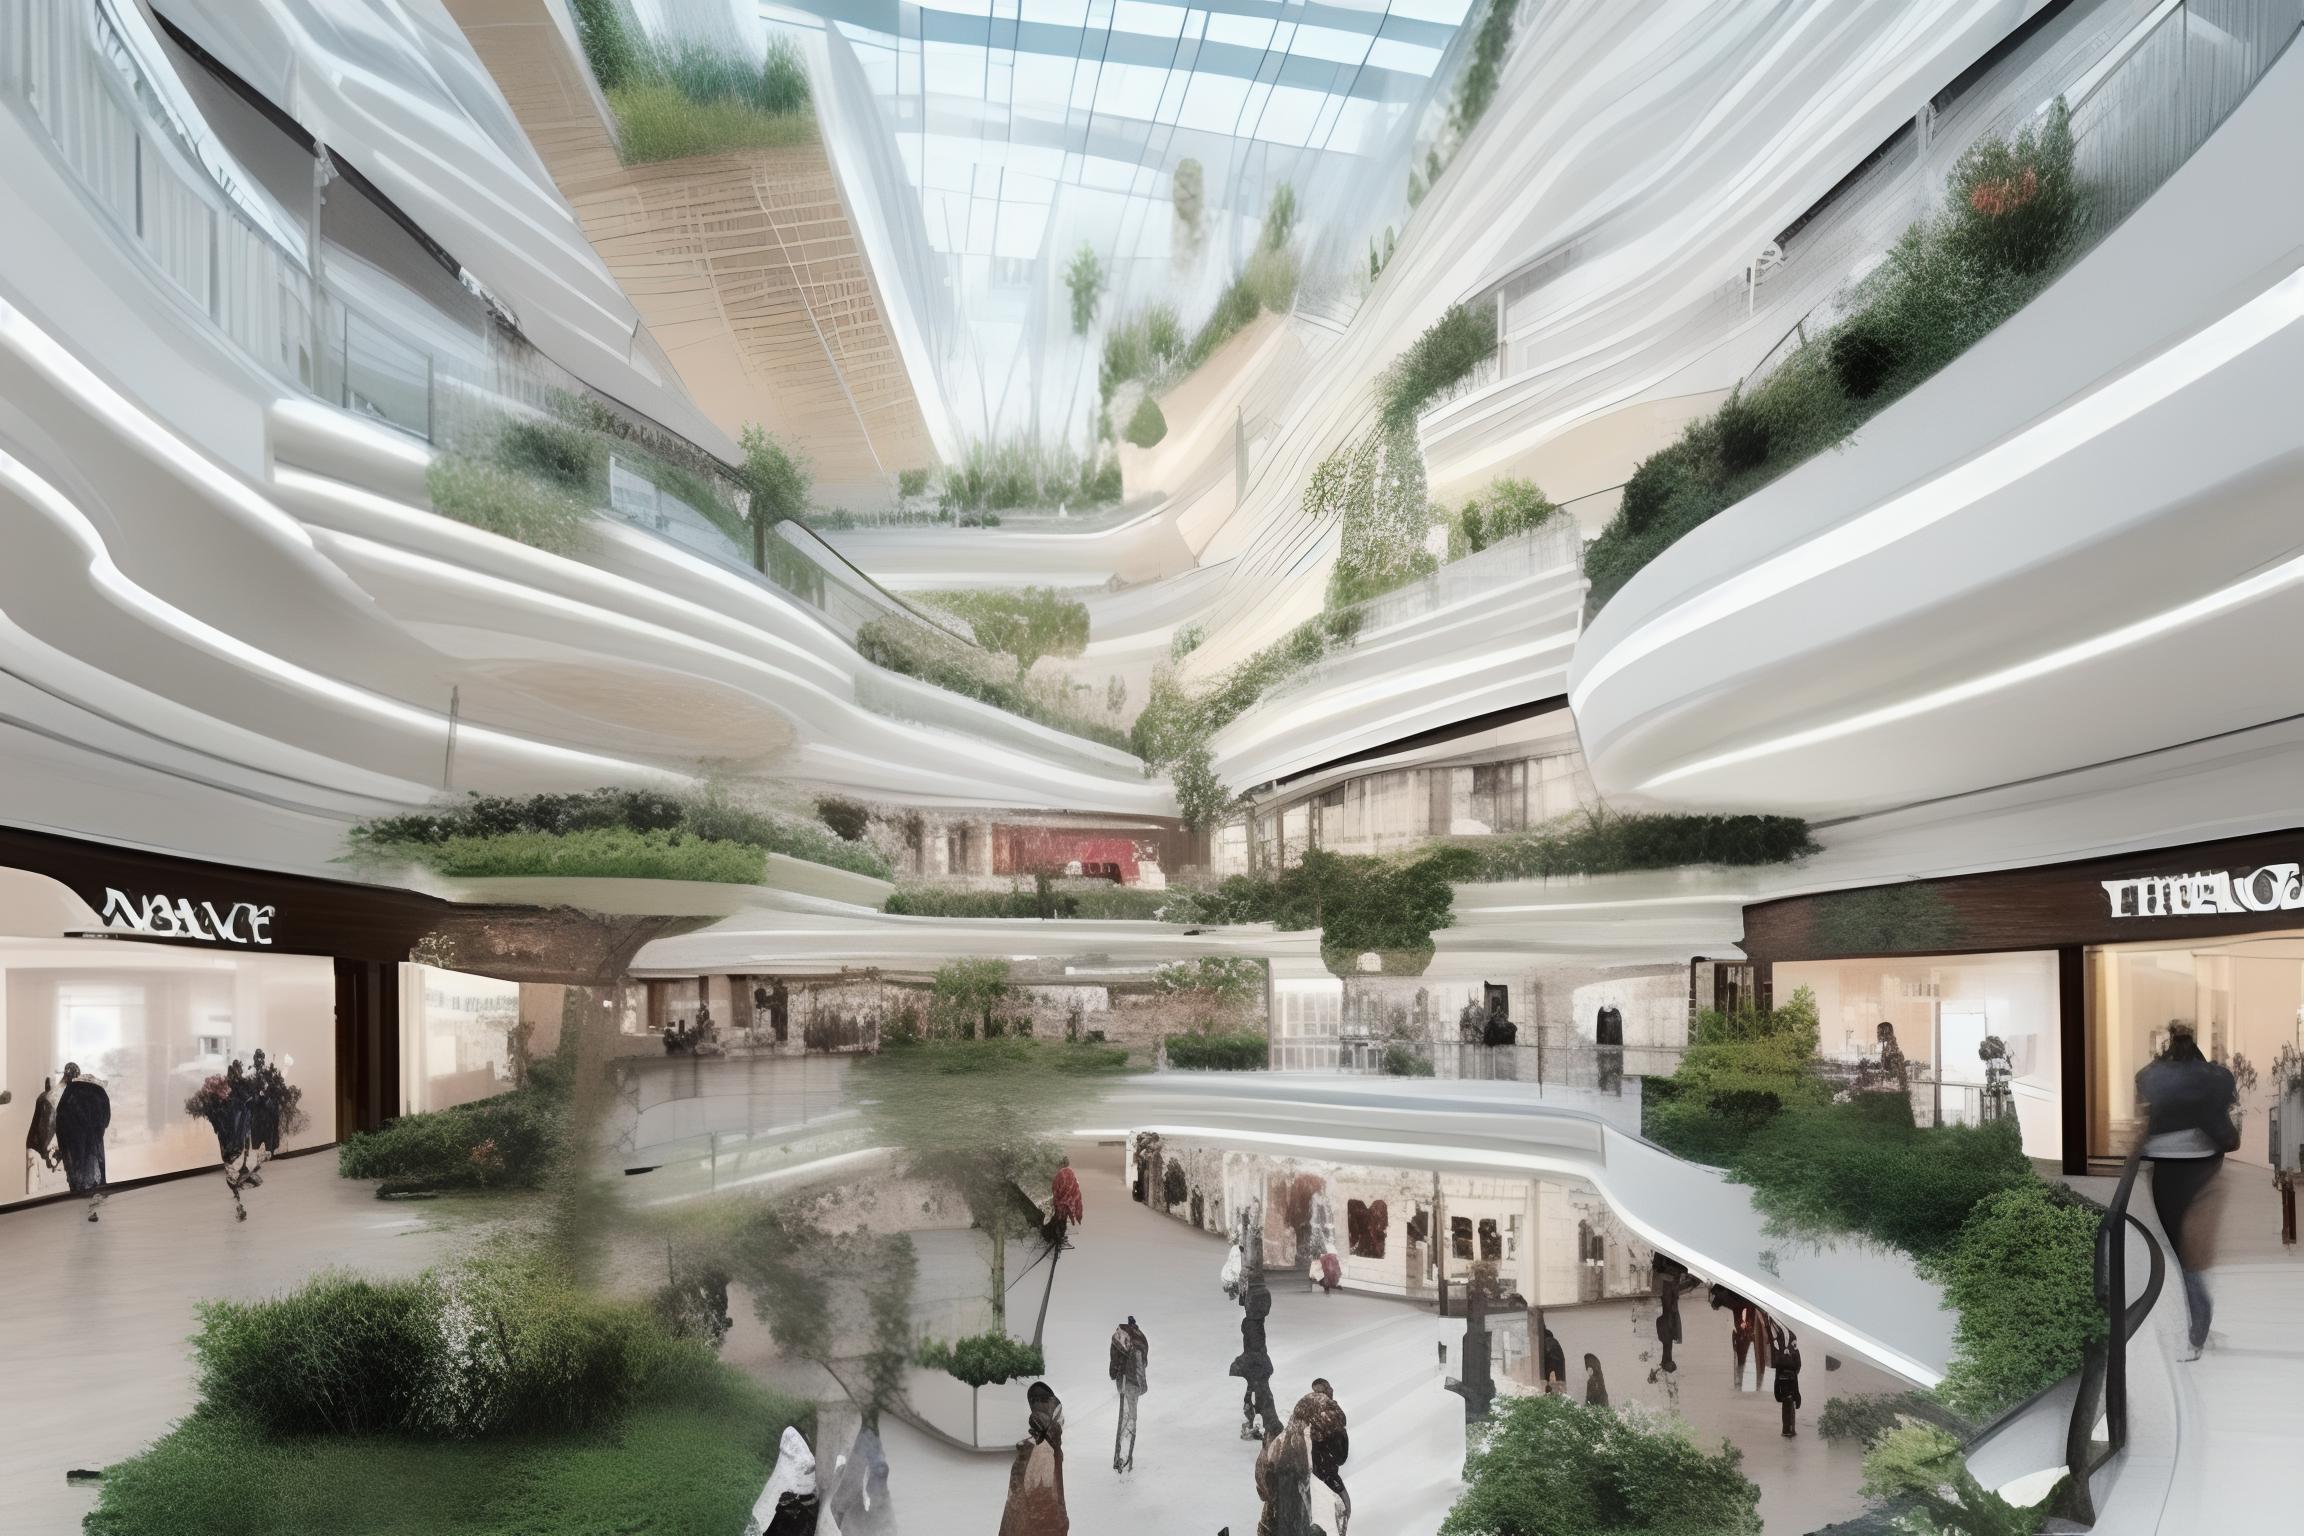 Modern style shopping mall atrium image by Yuyuuyuy